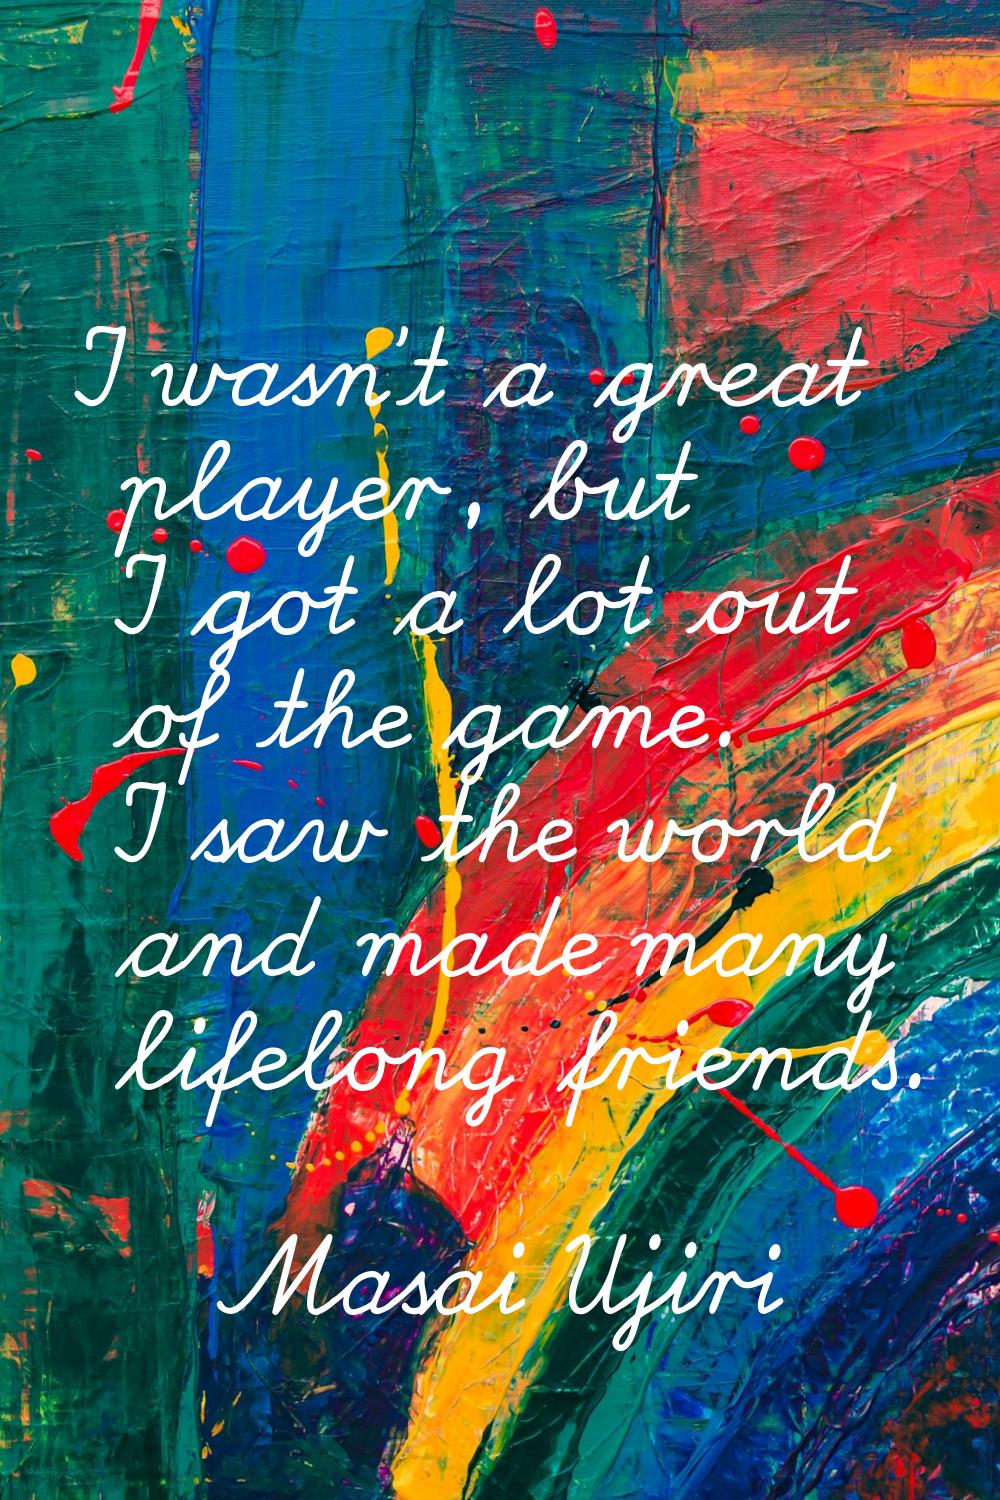 I wasn't a great player, but I got a lot out of the game. I saw the world and made many lifelong fr